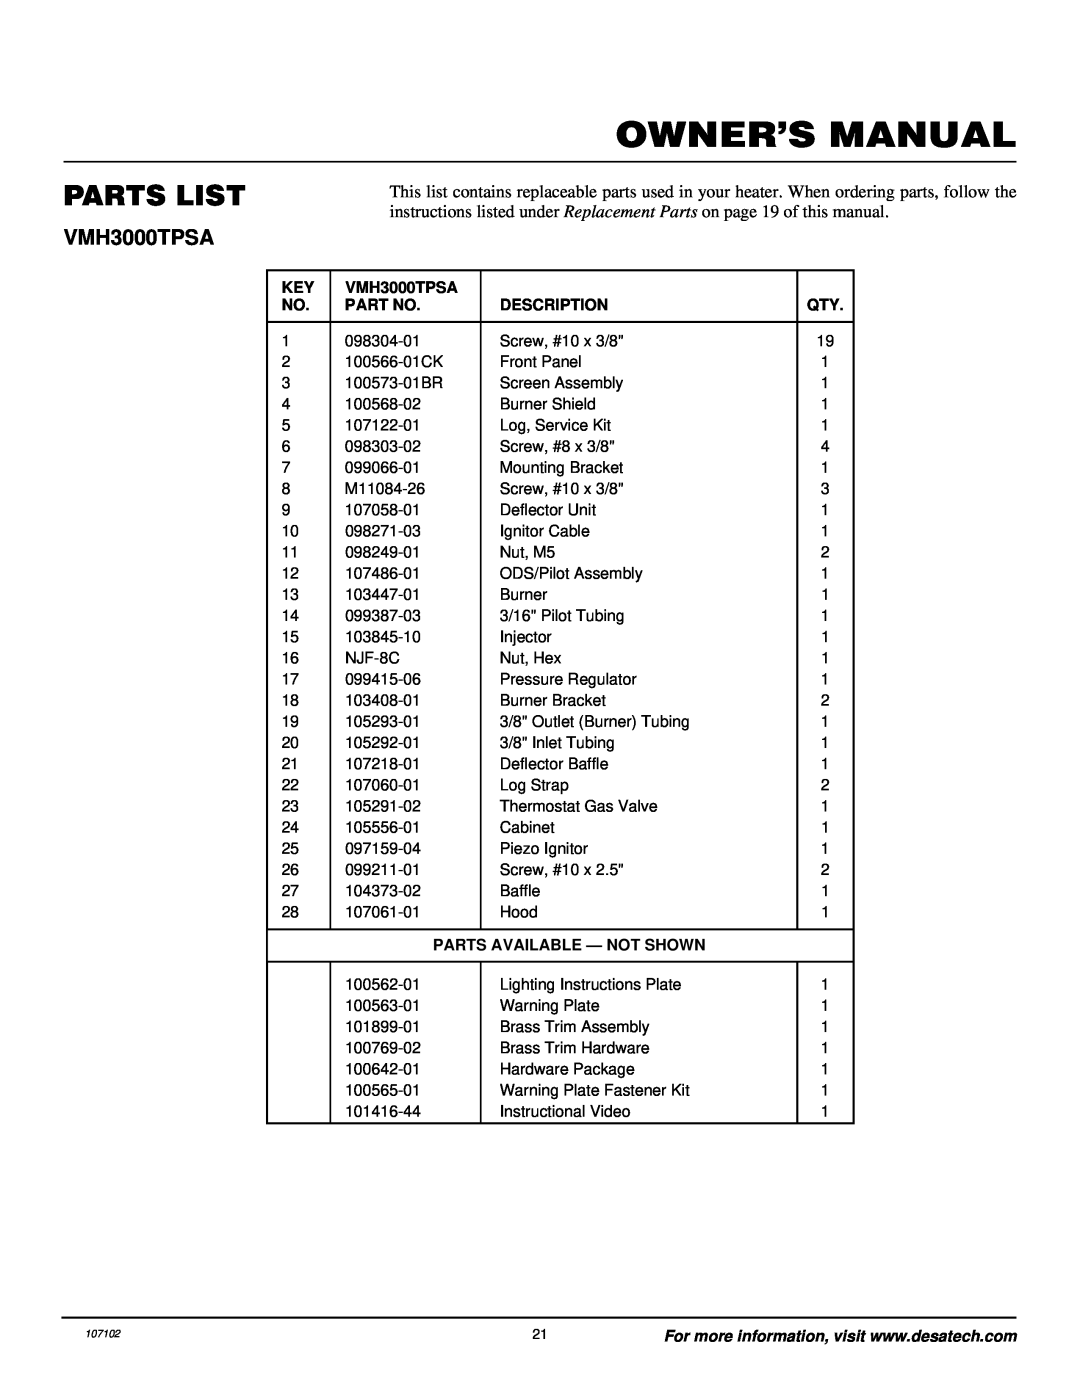 Vanguard Heating VMH3000TPSA installation manual Parts List, Description, Parts Available - Not Shown 